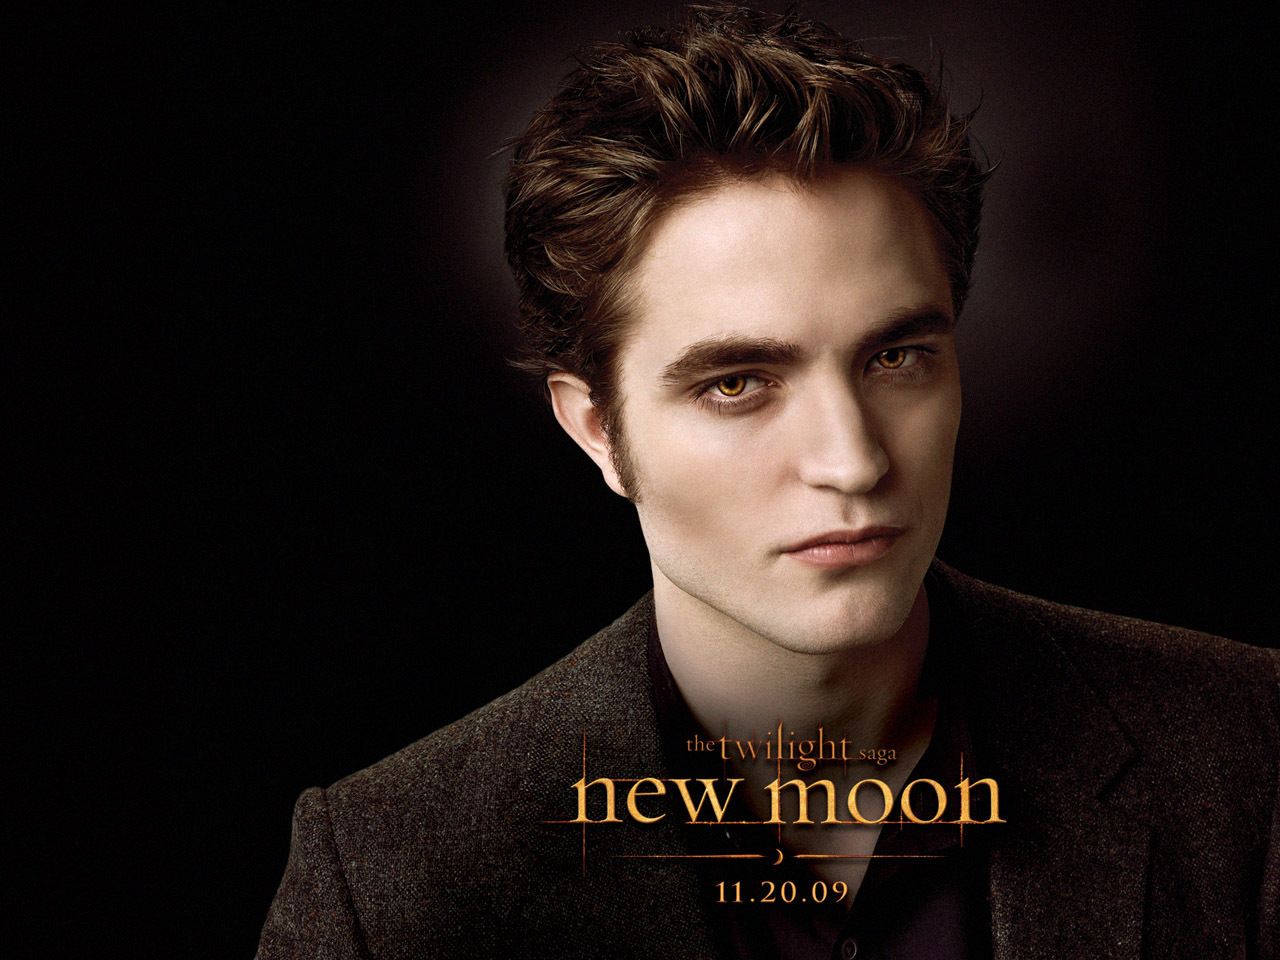 The Twilight Saga: New Moon Wallpapers